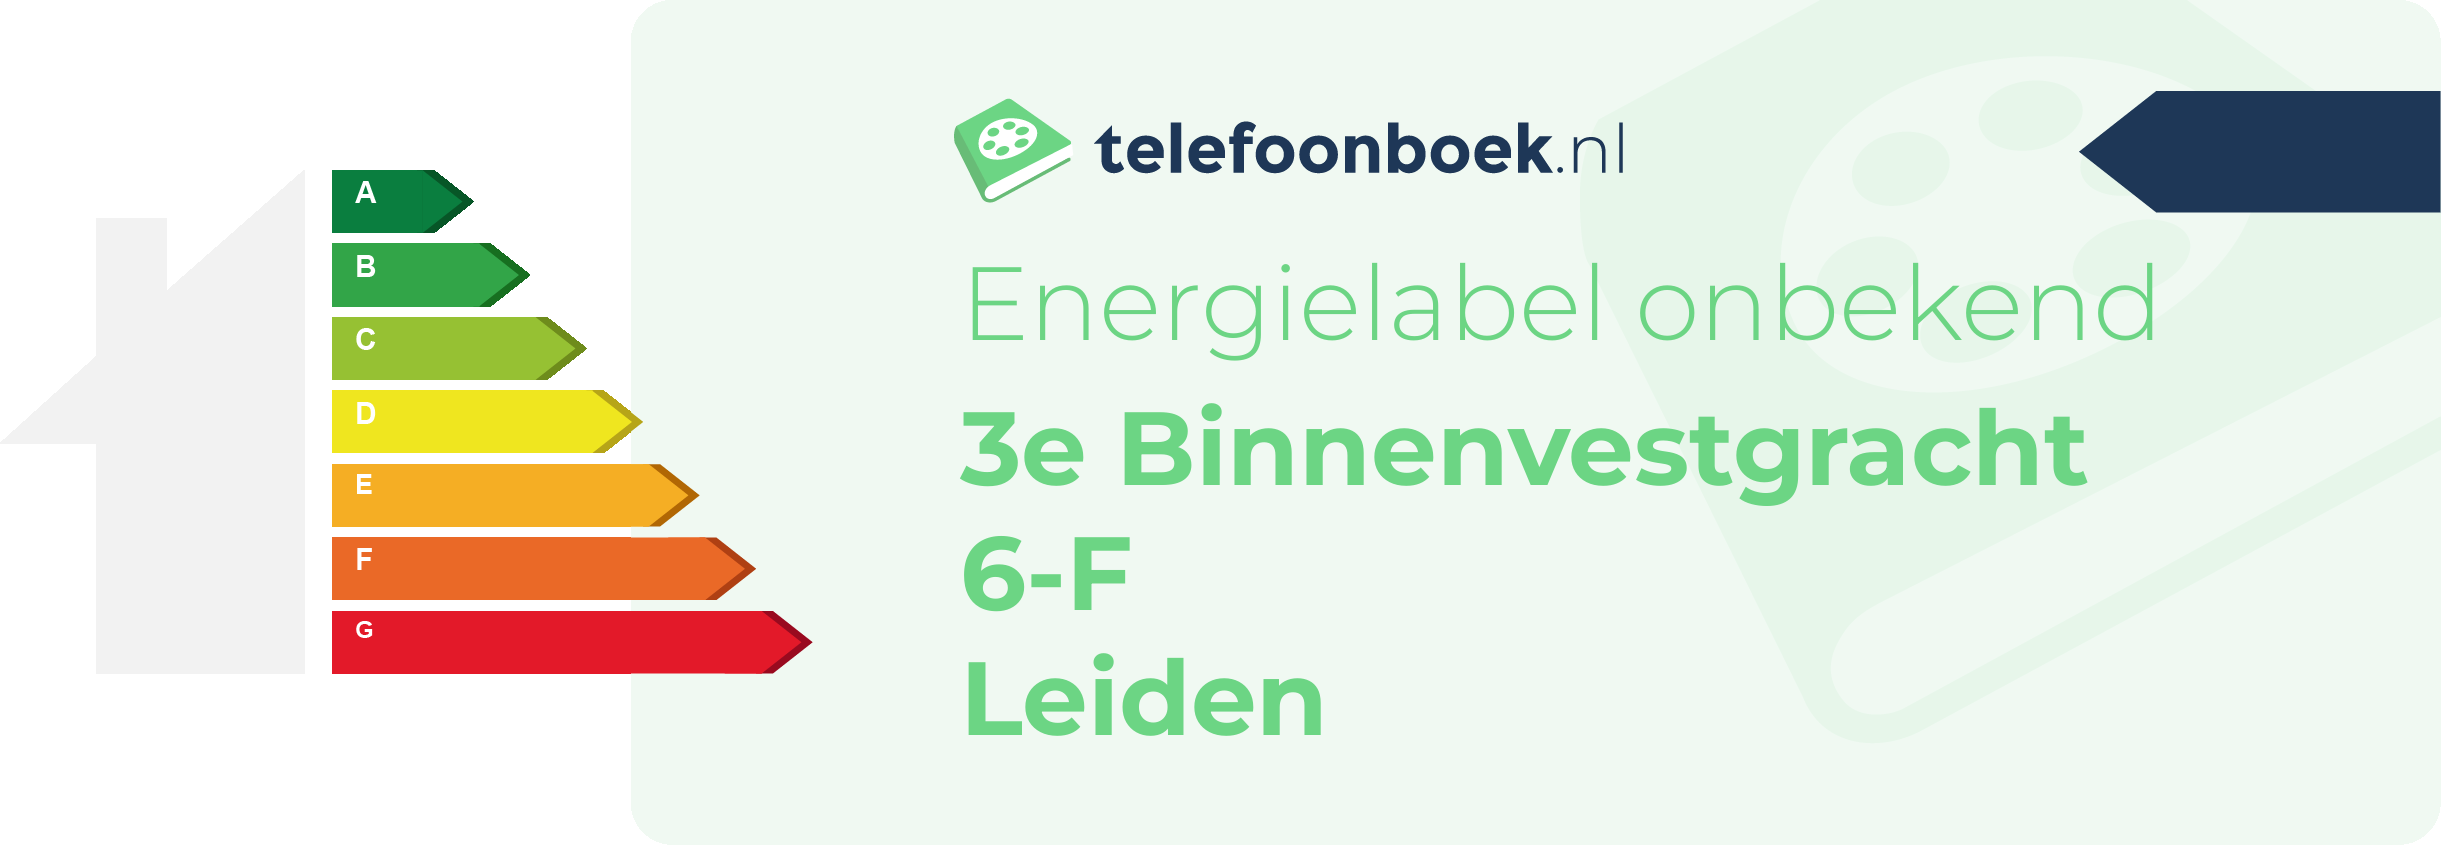 Energielabel 3e Binnenvestgracht 6-F Leiden